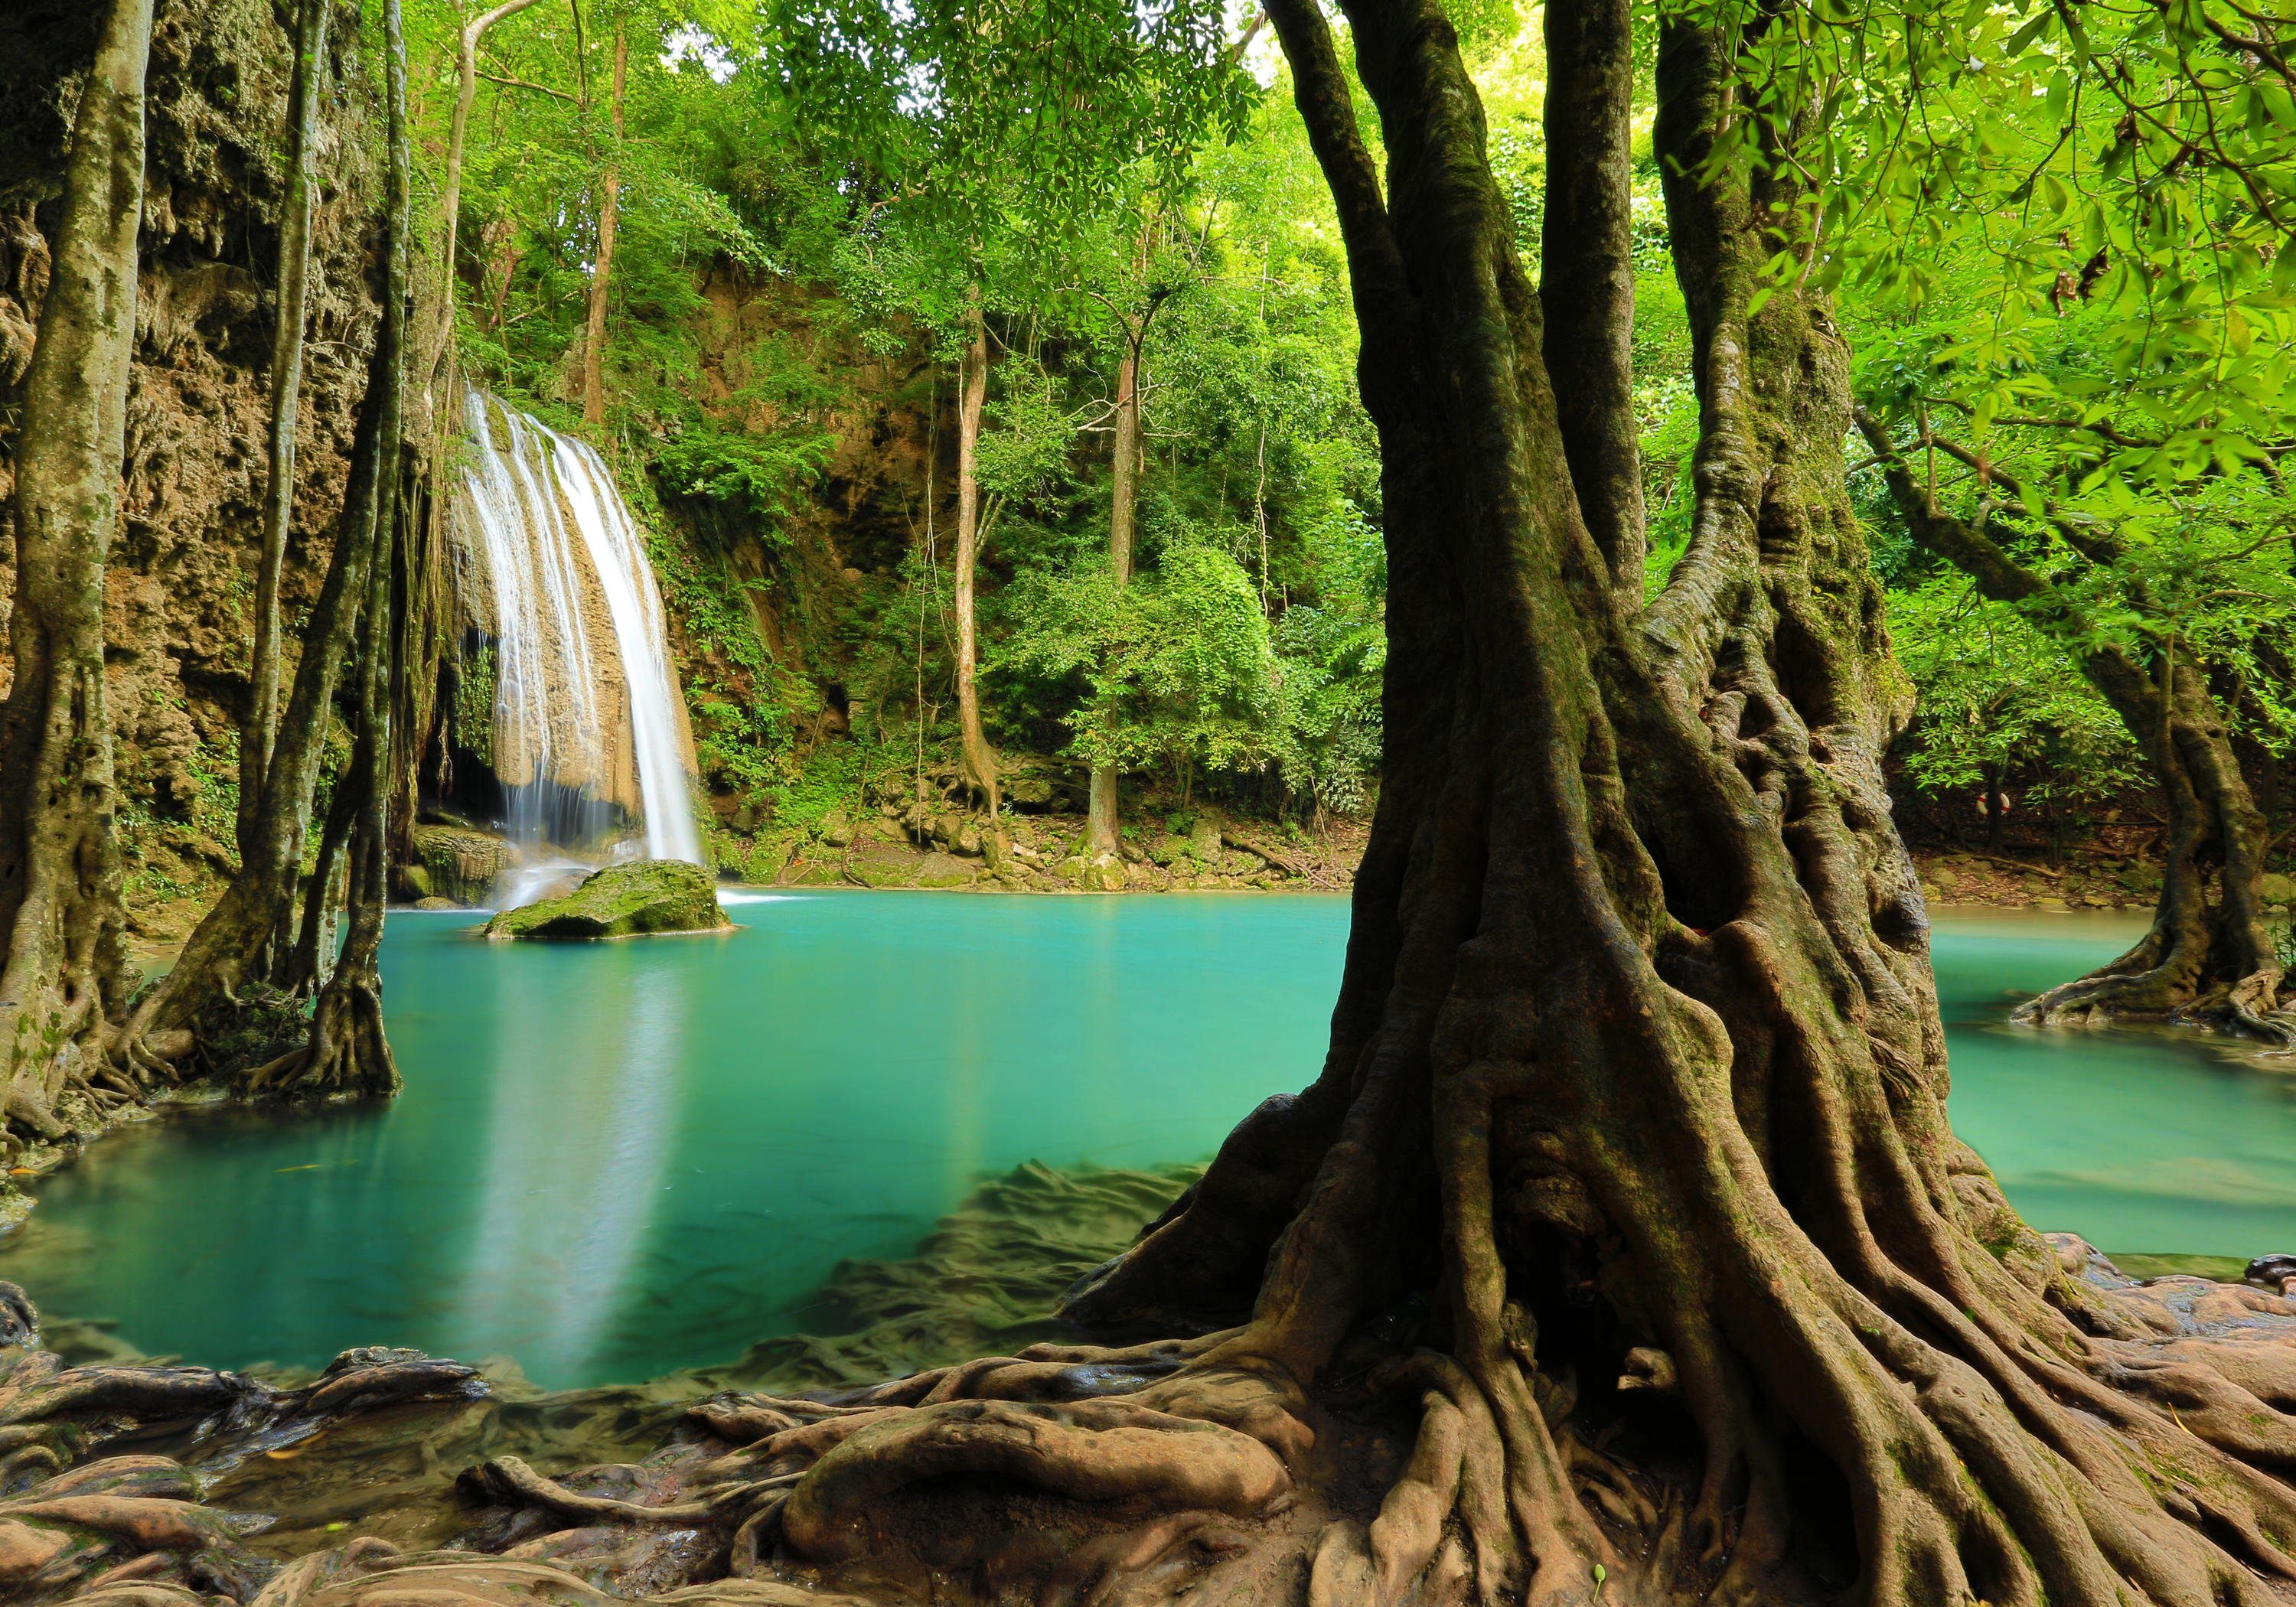 Wandtapete, von wandmotiv24 Wasserfall, Thailand Landschaft glatt, Motivtapete, Vliestapete Fototapete mit matt,